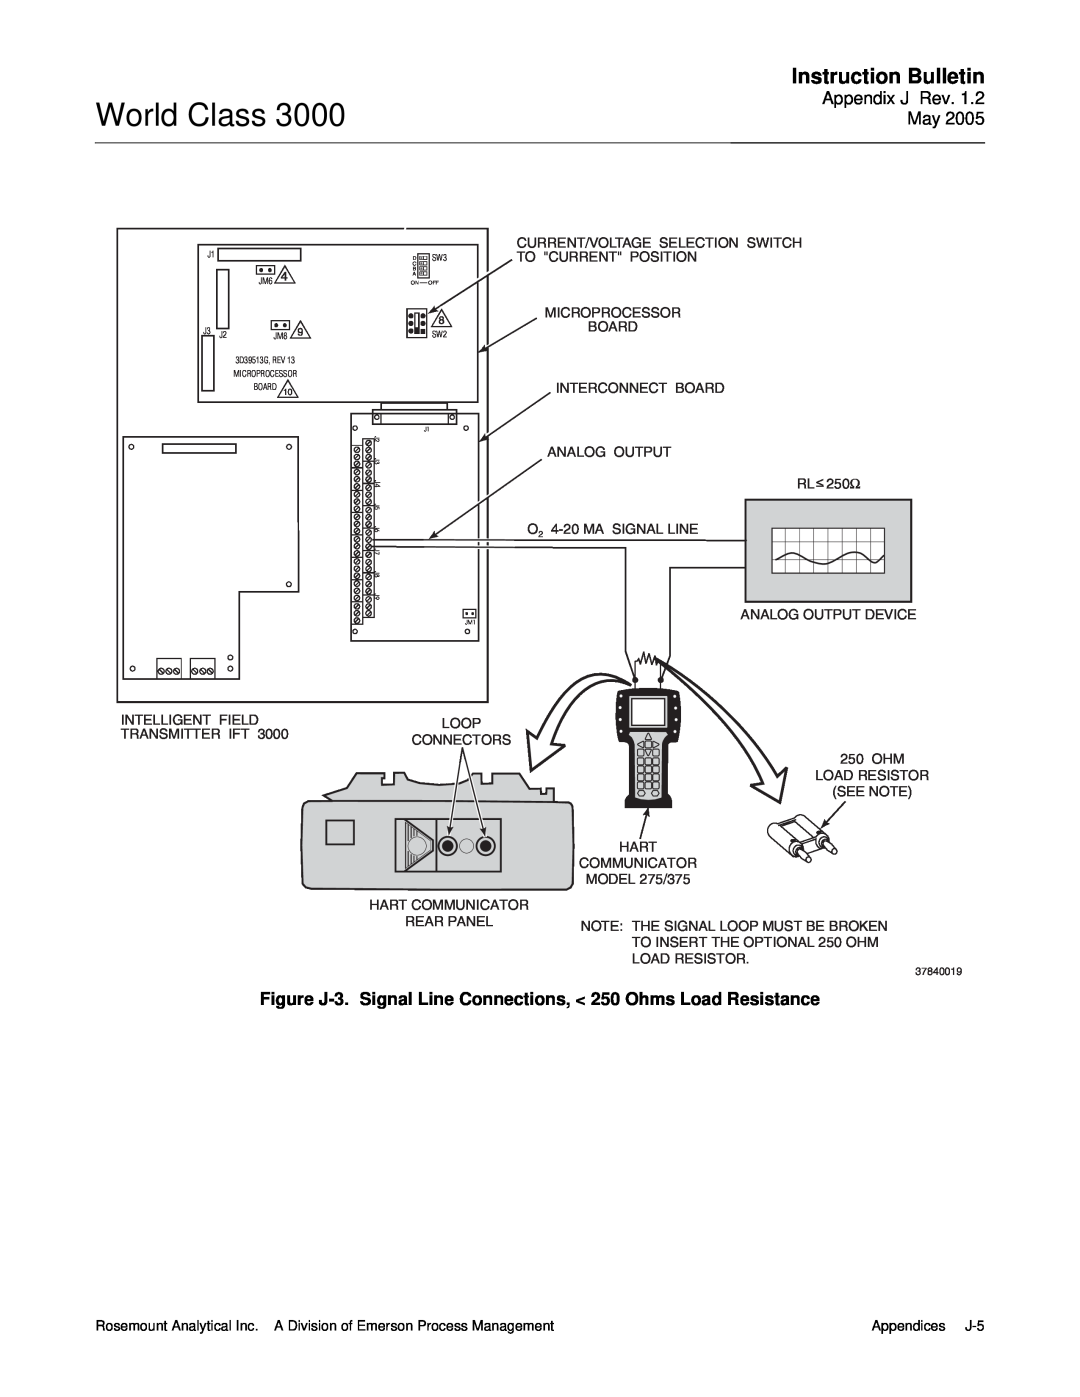 Emerson 3000 instruction manual World Class, Instruction Bulletin, Appendices J-5 